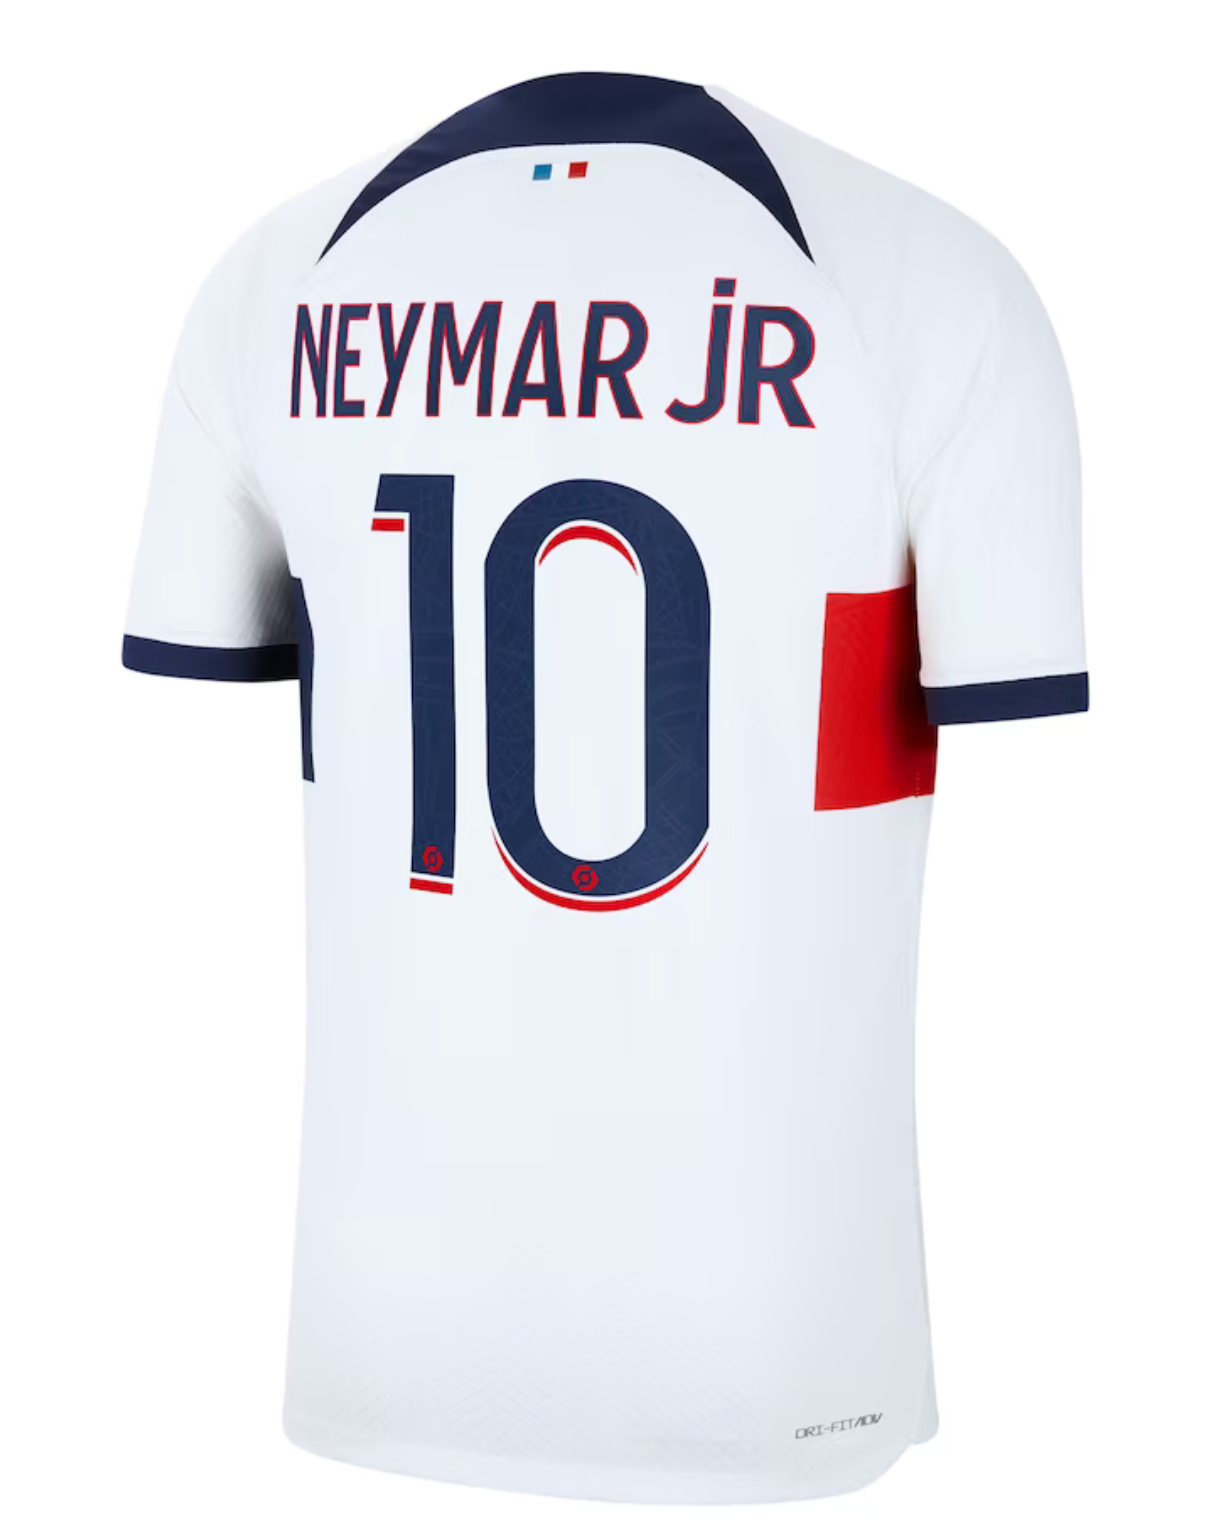 Neymar Jerseys, Neymar PSG Kits, Brazil Neymar Shirts and Gear